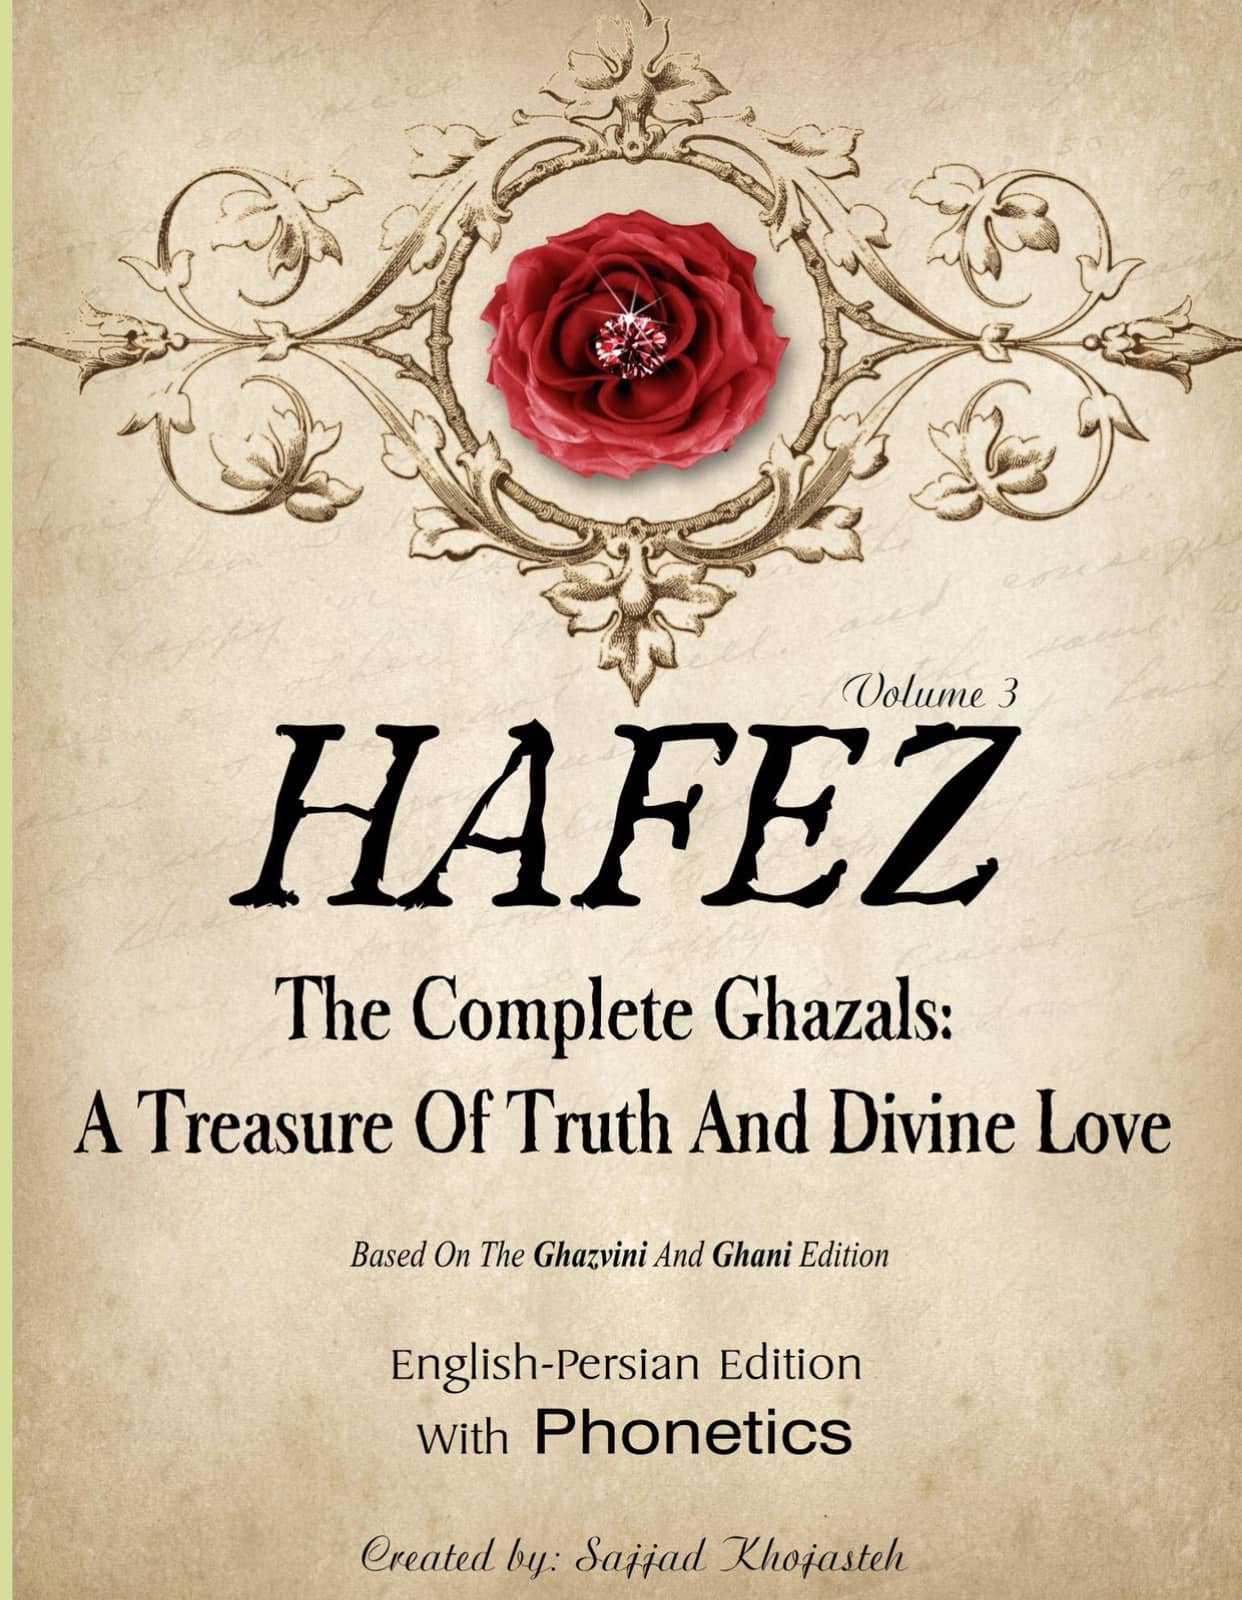 Hafiz ghazals with phonetics